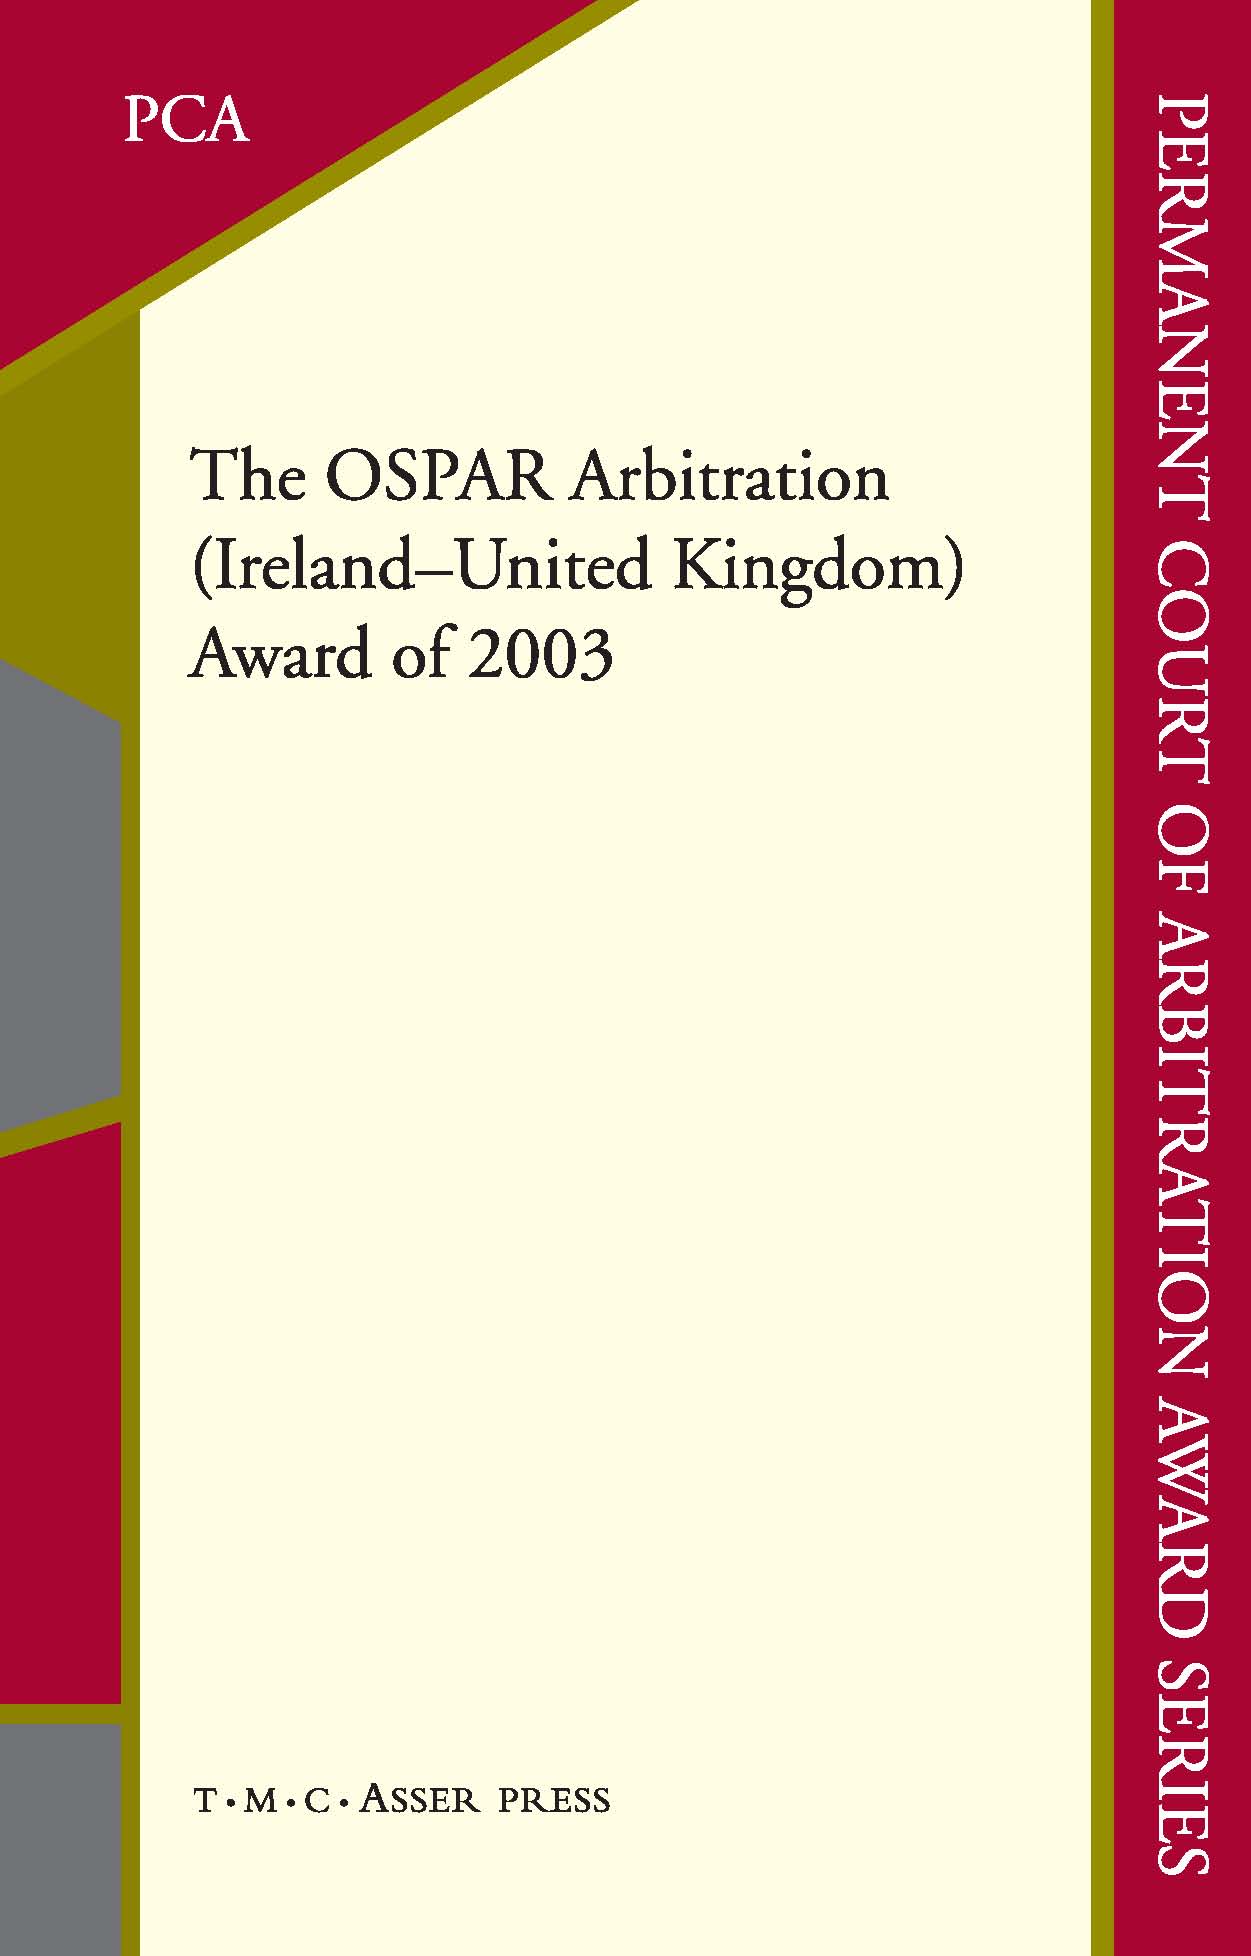 The OSPAR Arbitration (Ireland – United Kingdom) Award of 2003